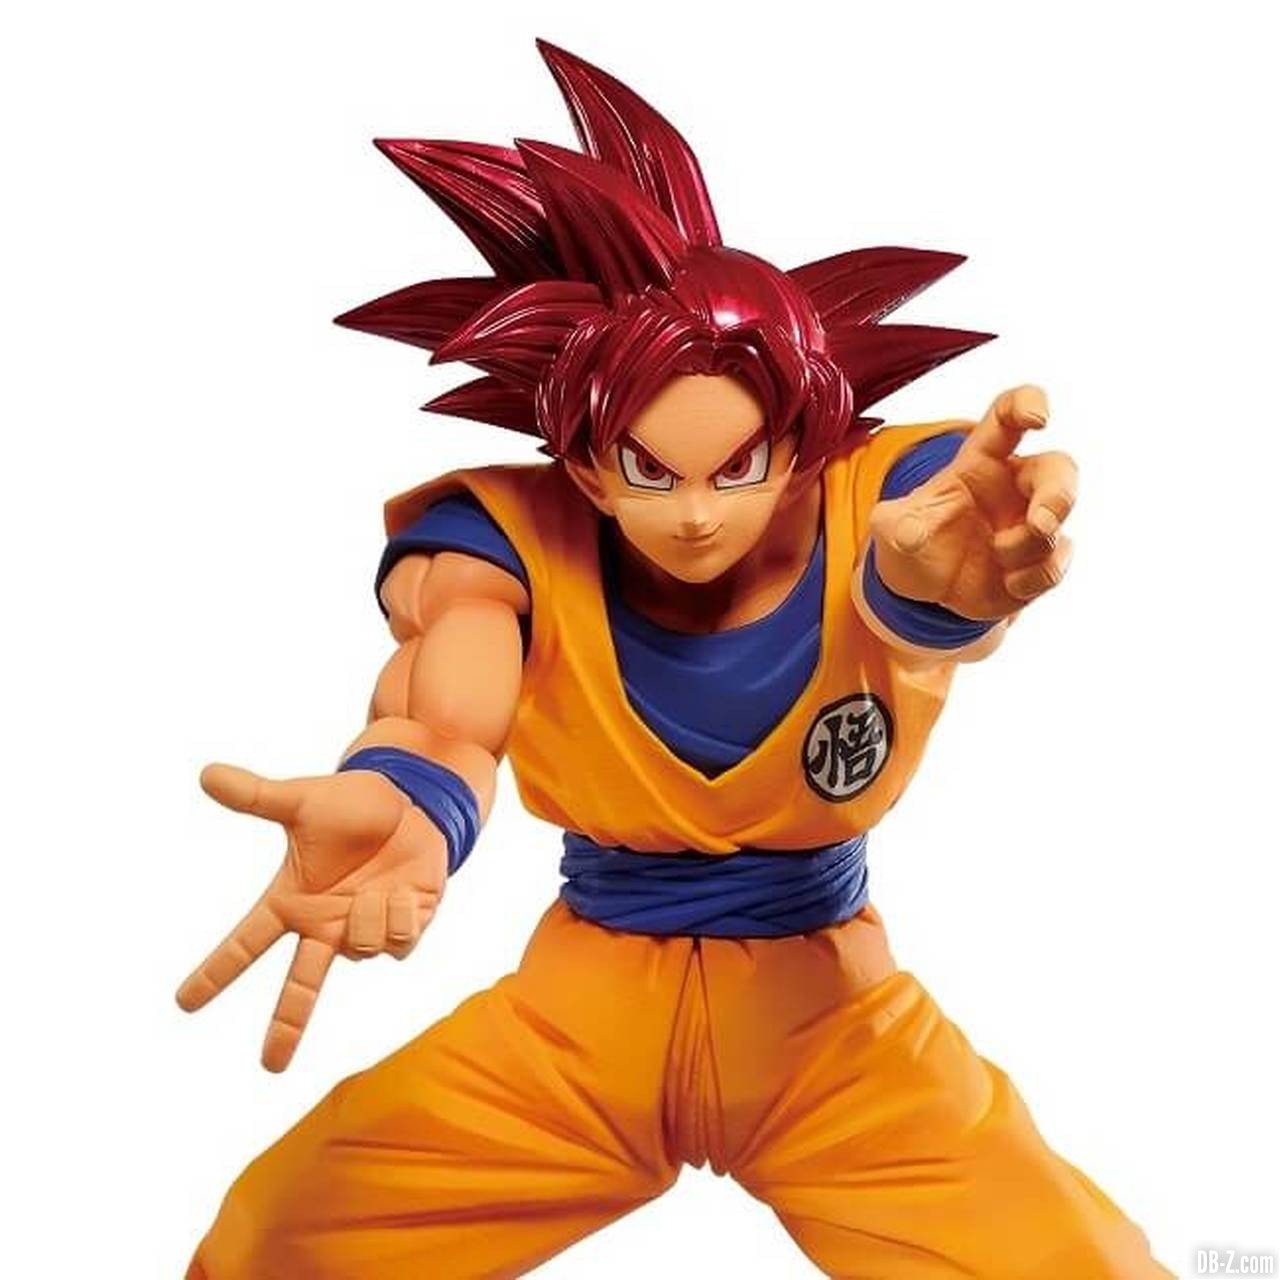 Figurine "Maximatic The Son Goku 5" (V) Super Saiyan God Dragon Ball Super